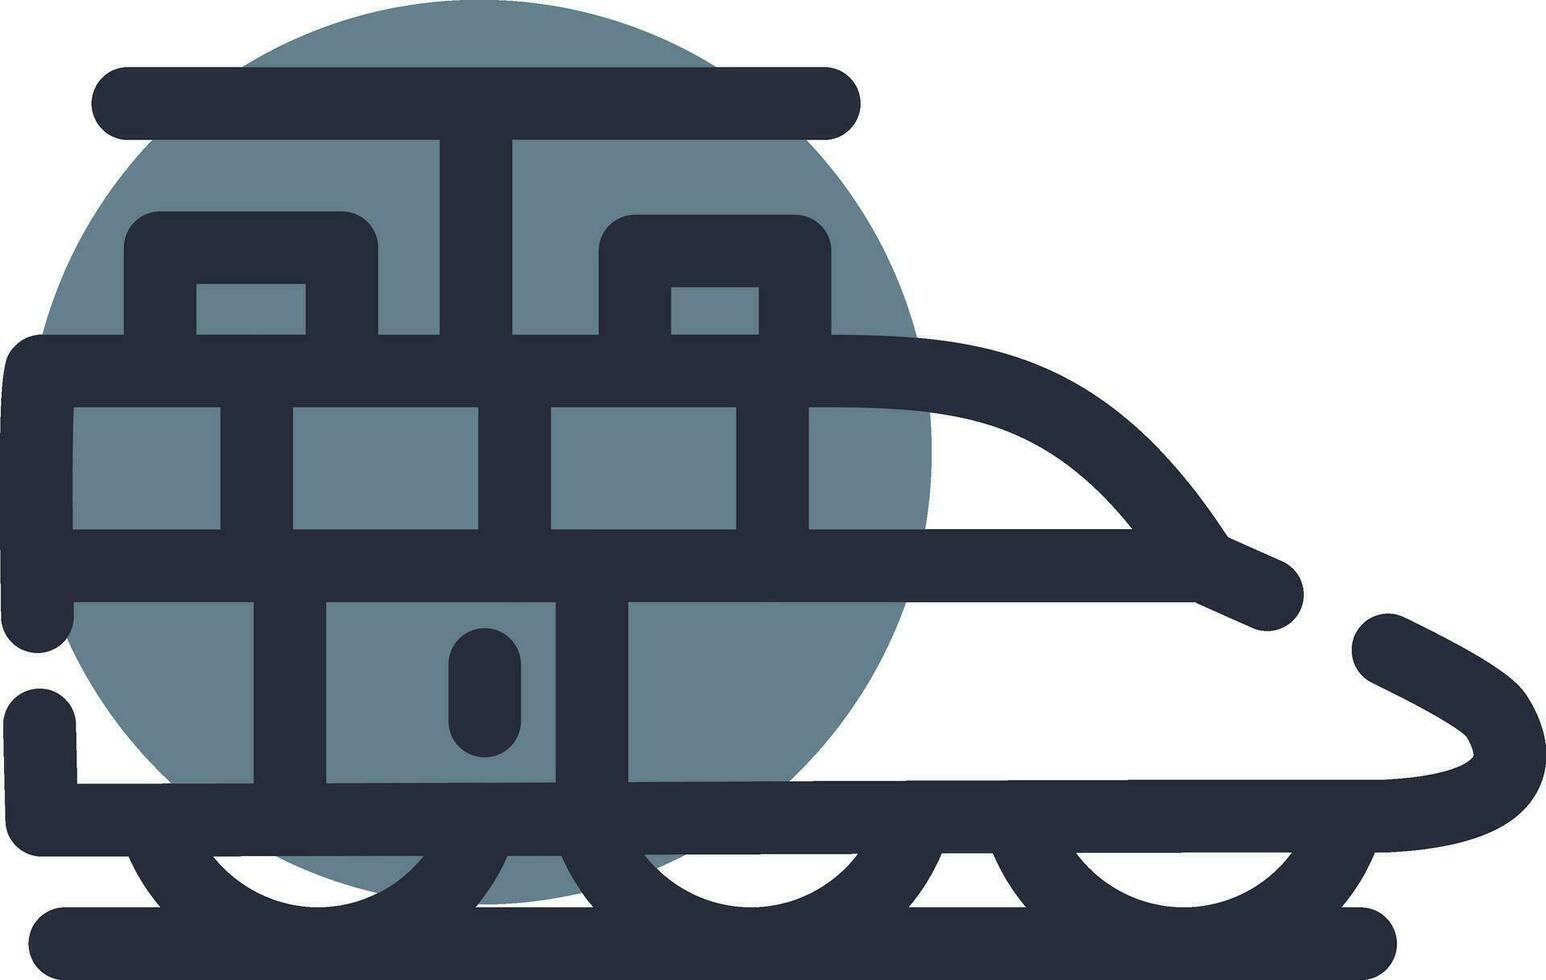 diseño de icono creativo de tren vector